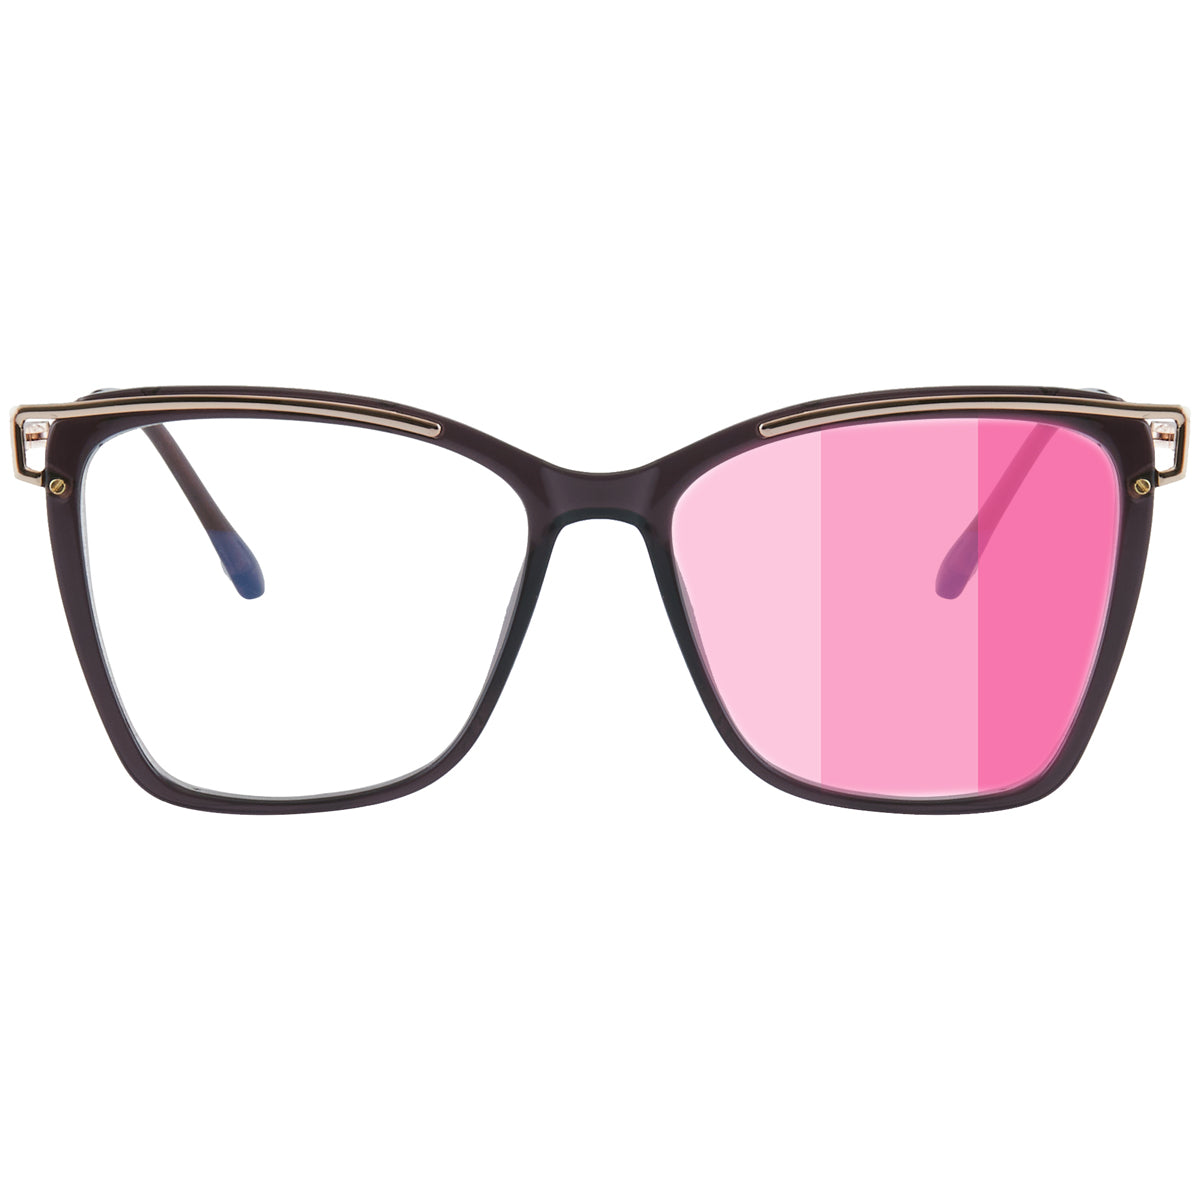 LUXYIN Persea Photochromic Glasses